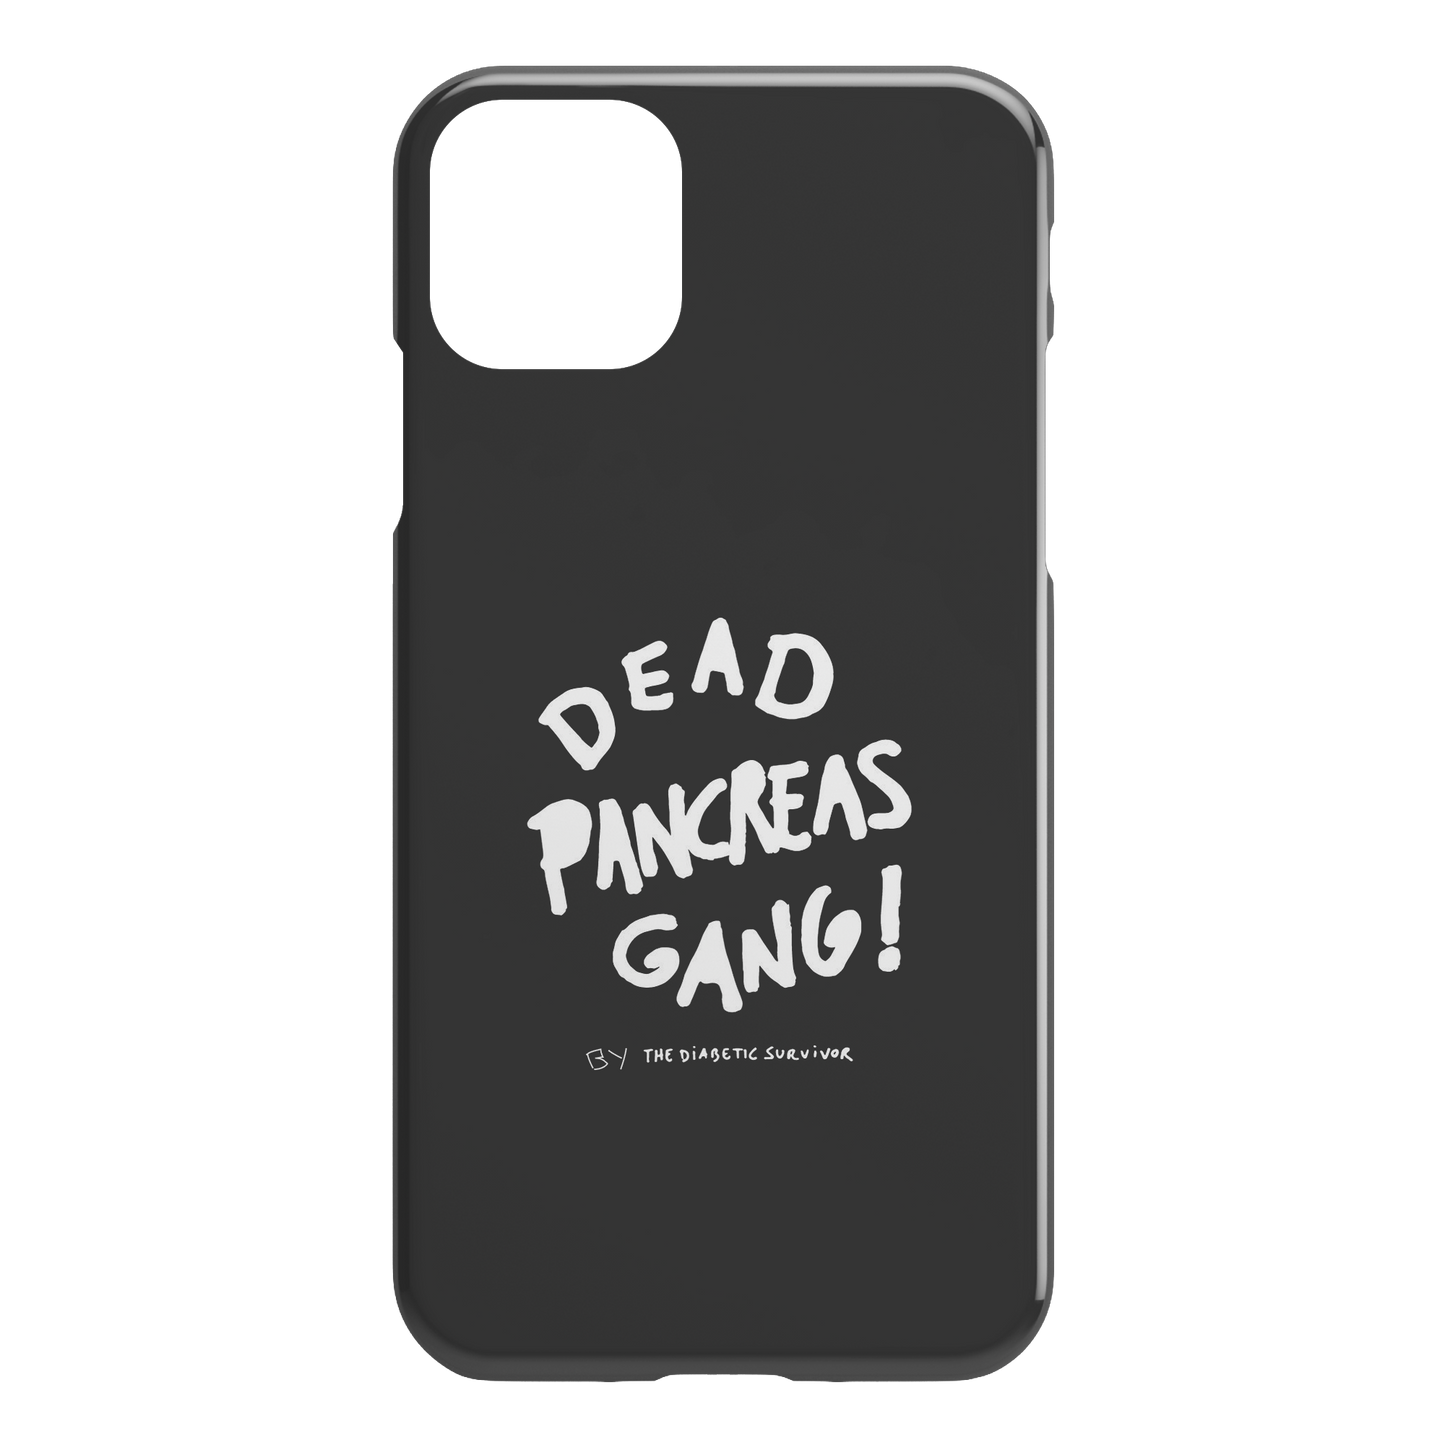 iPhone Case Dead Pancreas Gang